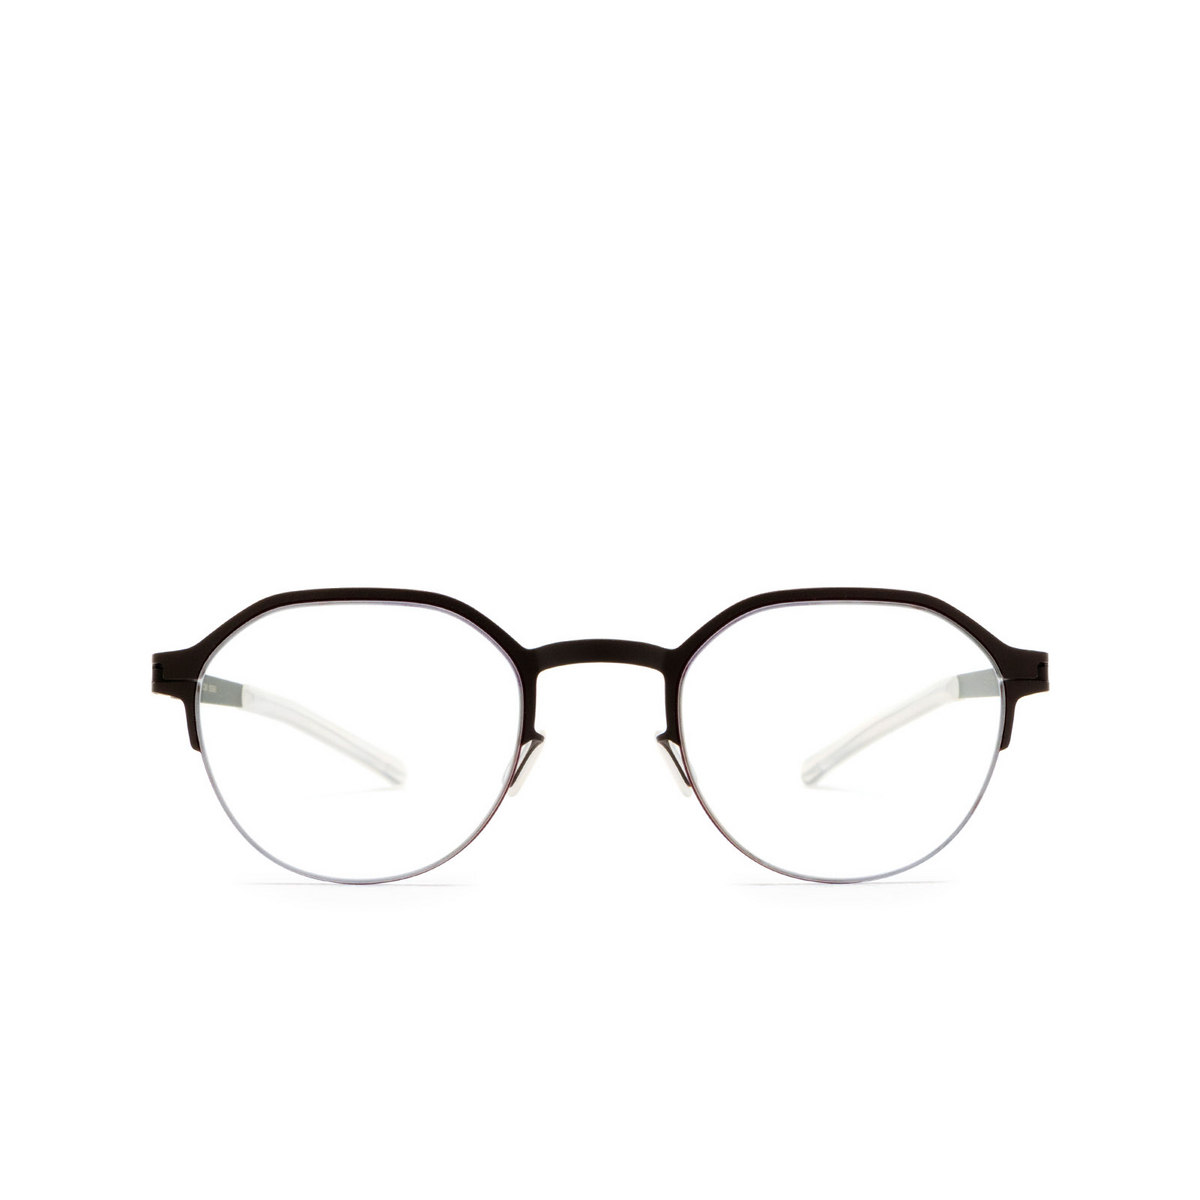 Mykita DORIAN Eyeglasses 541 Ebony Brown/Cranberry - front view